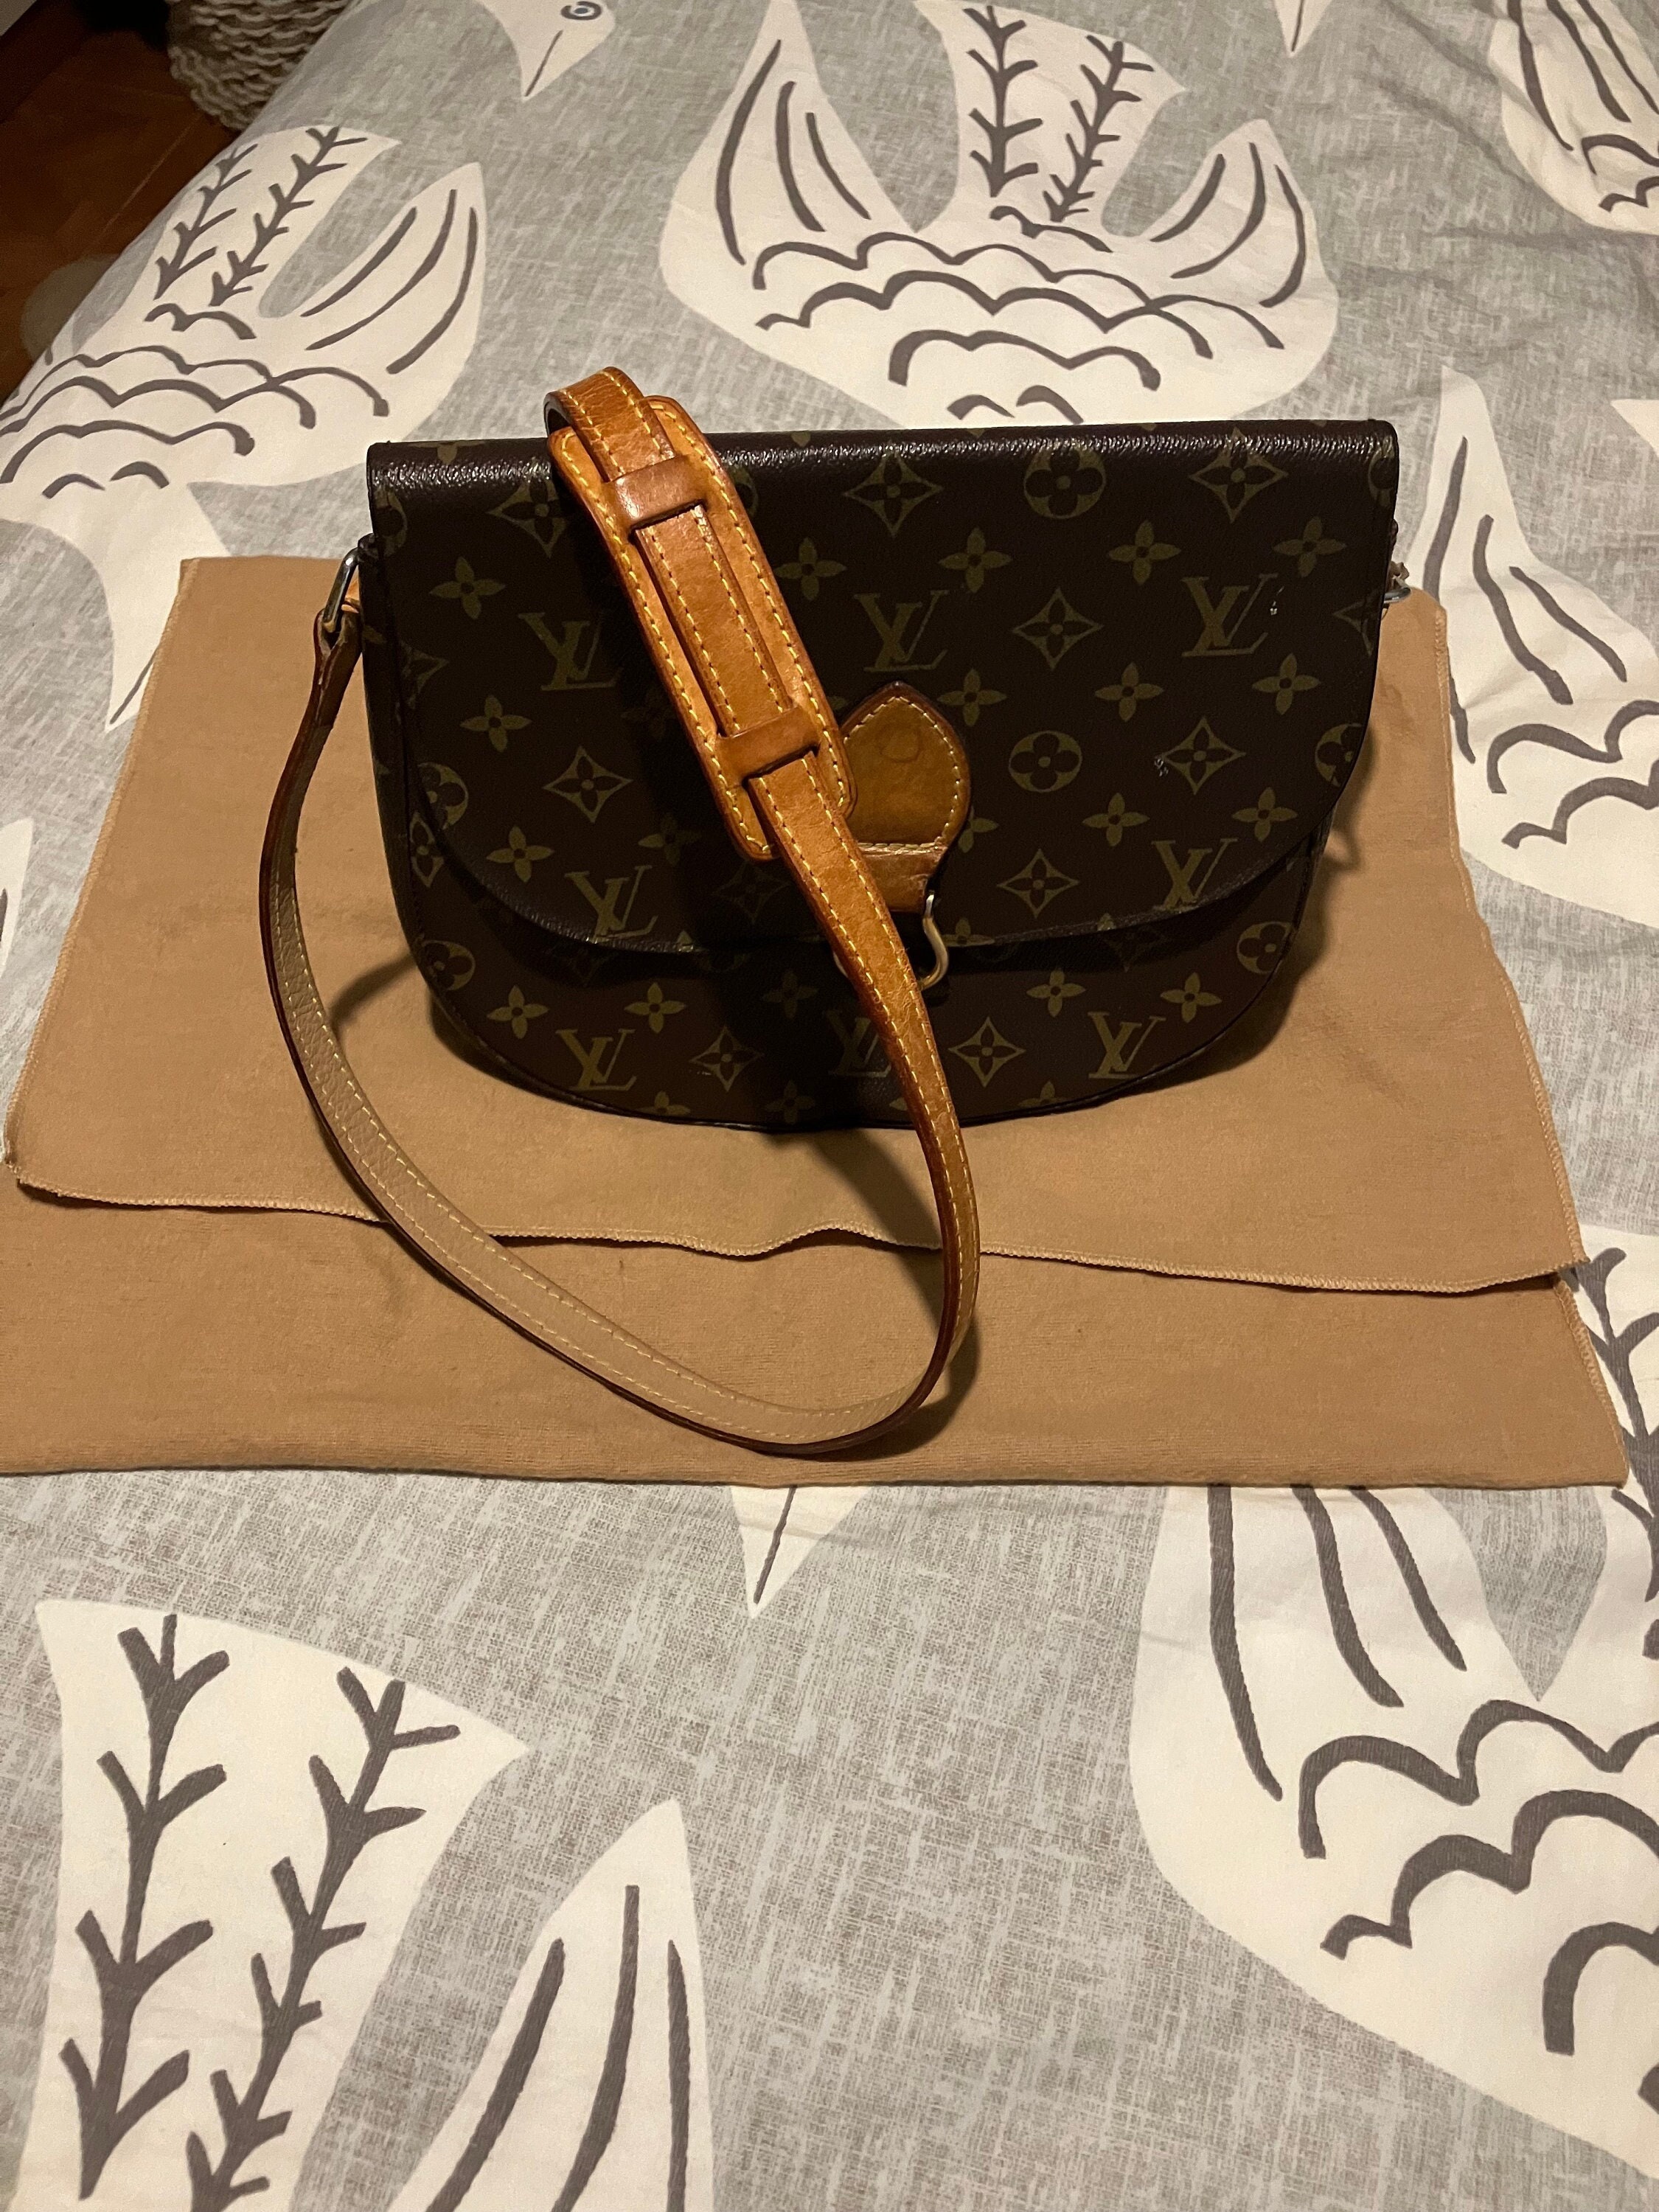 Pre-Owned Louis Vuitton Mini Lin Croisette Bag Charm